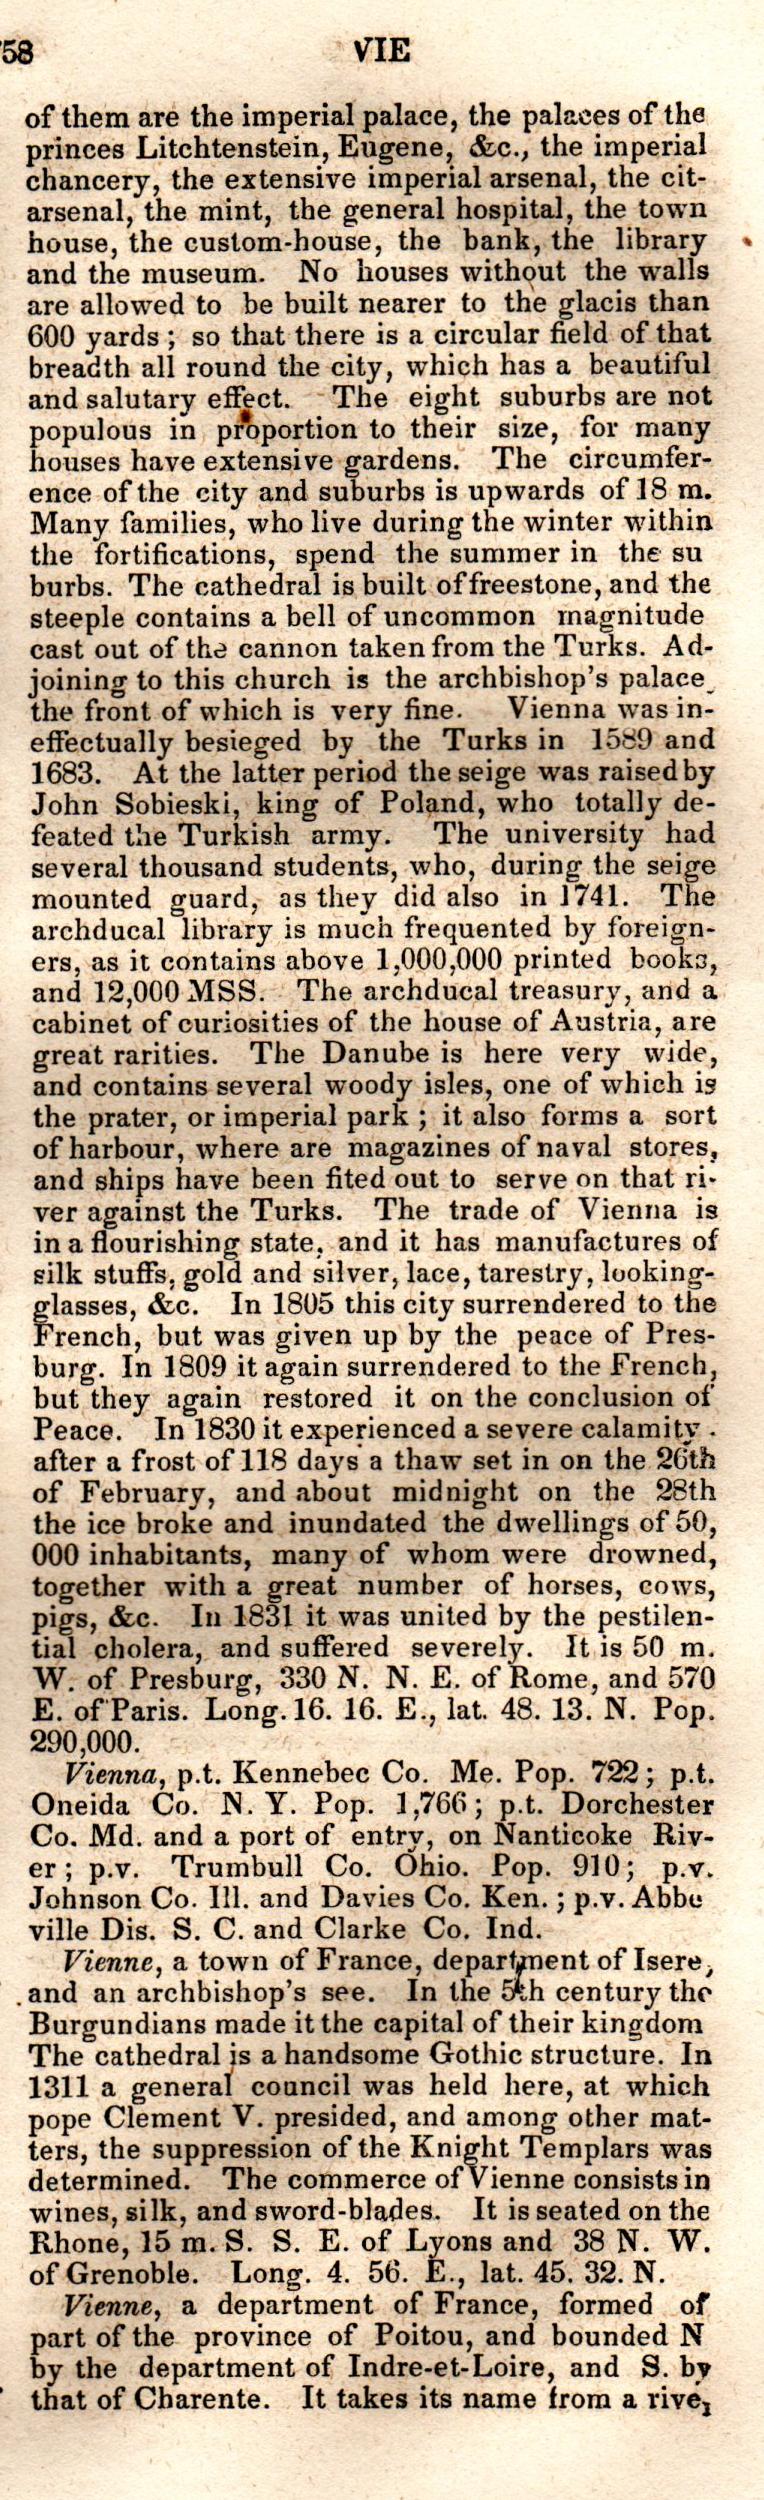 Brookes’ Universal Gazetteer (1850), Page 758 Right Column